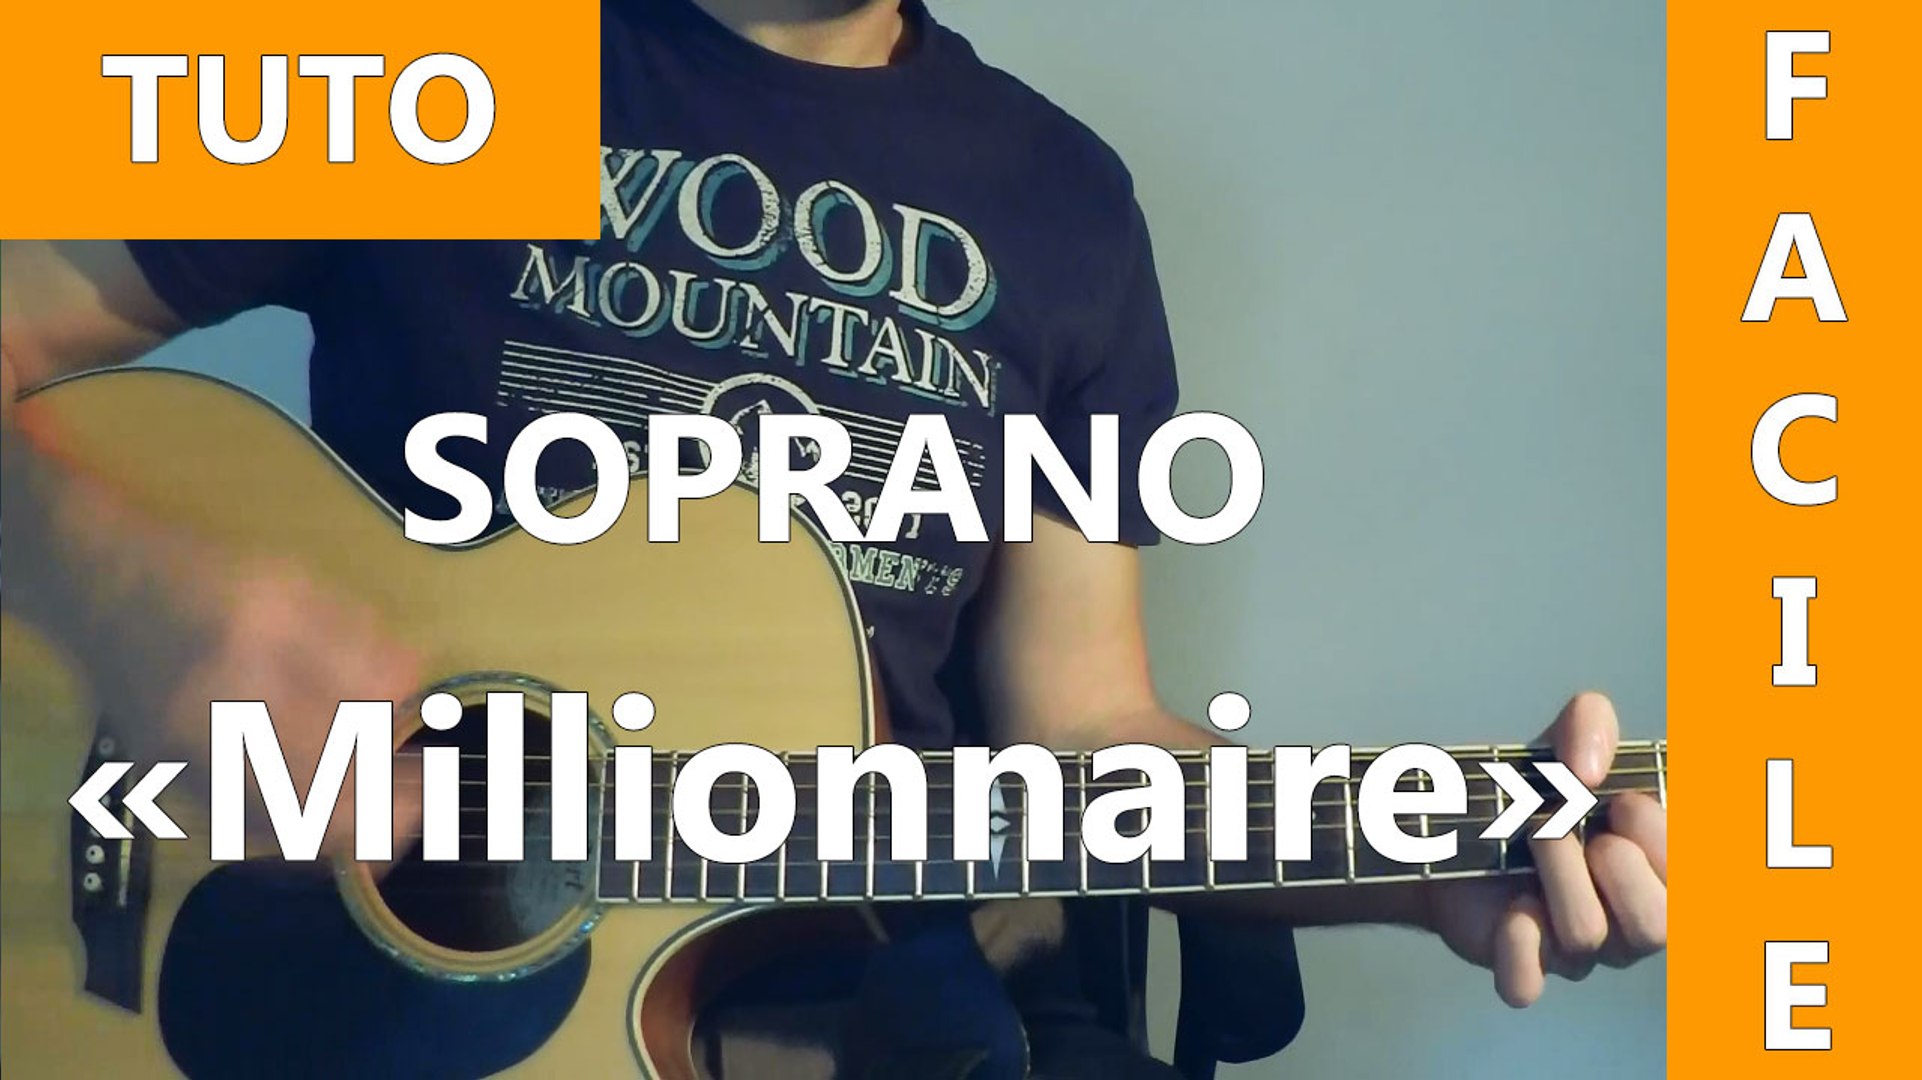 Soprano - Millionnaire - TUTO Guitare - Vidéo Dailymotion